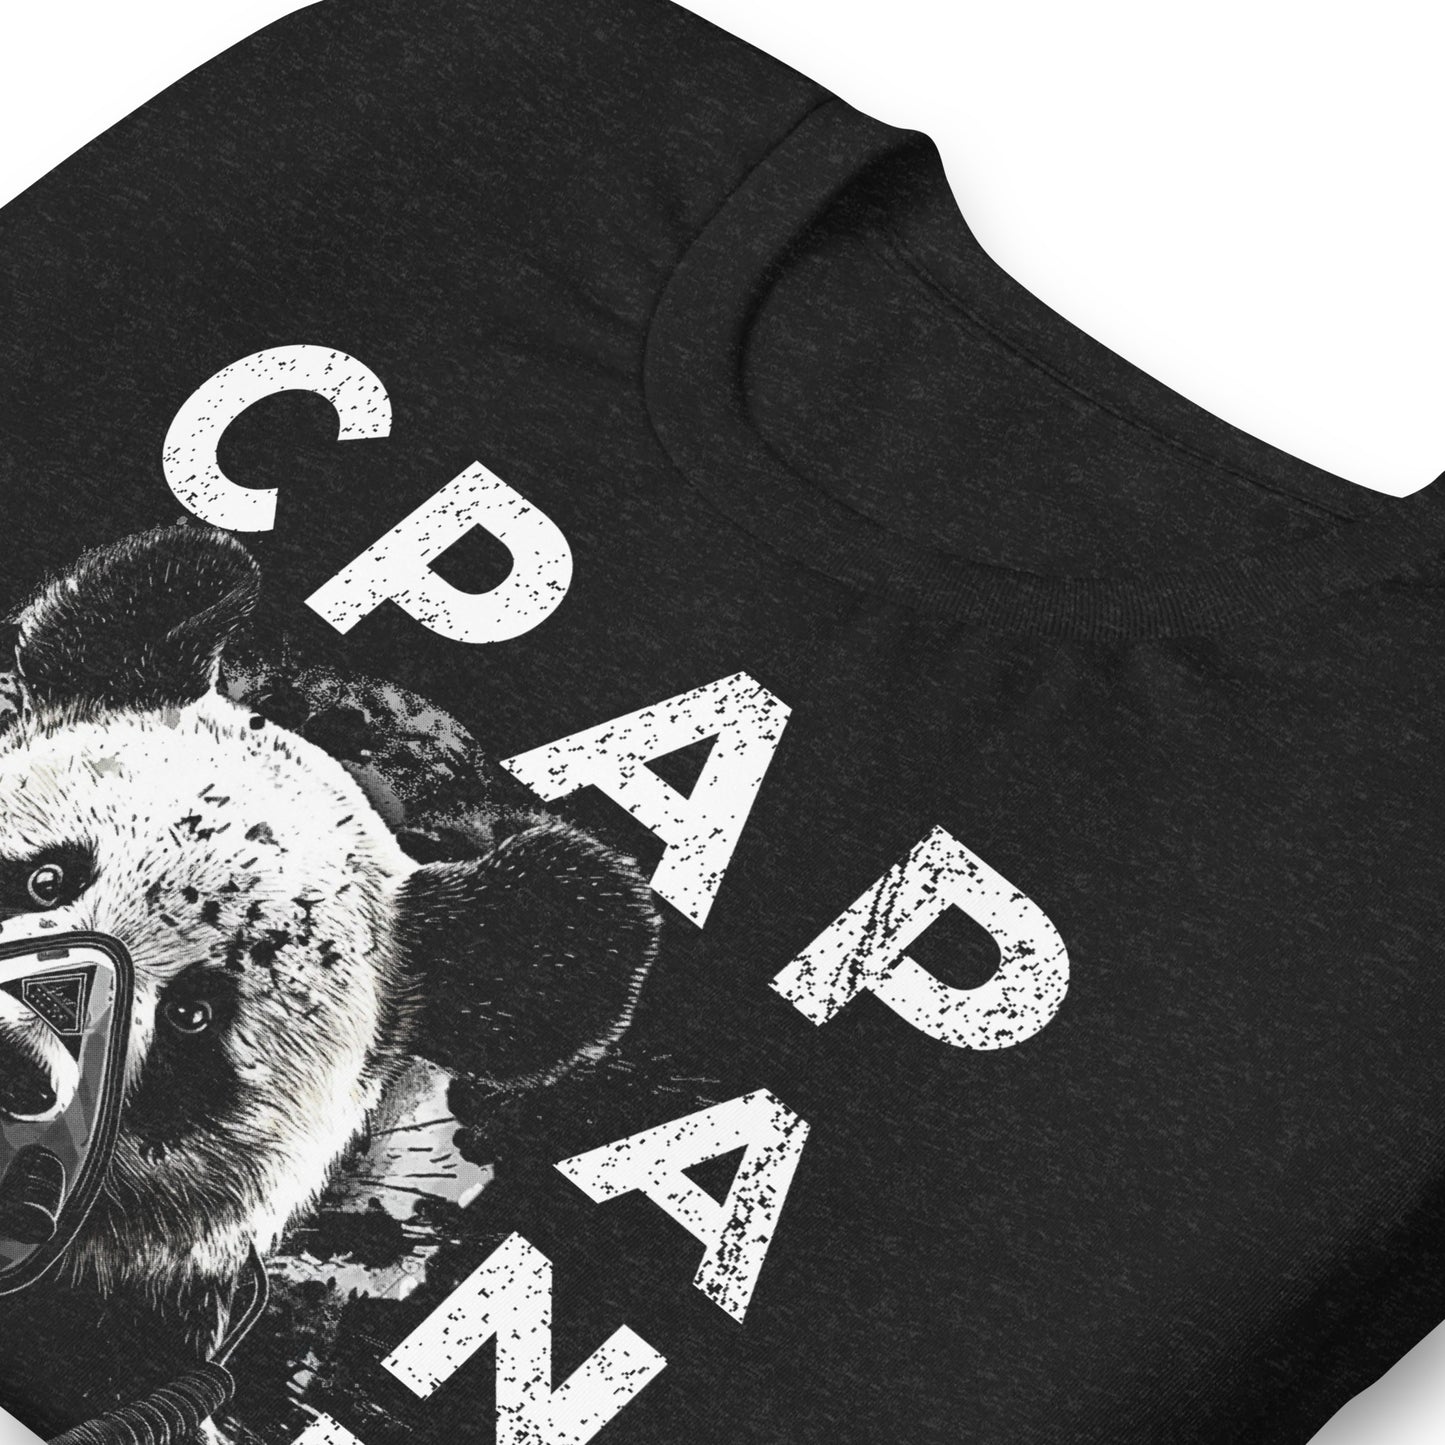 CPAPanda, Panda Wearing a CPAP, CPAP, Animals, Sleep Apnea, Graphic Tee Shirt, Black